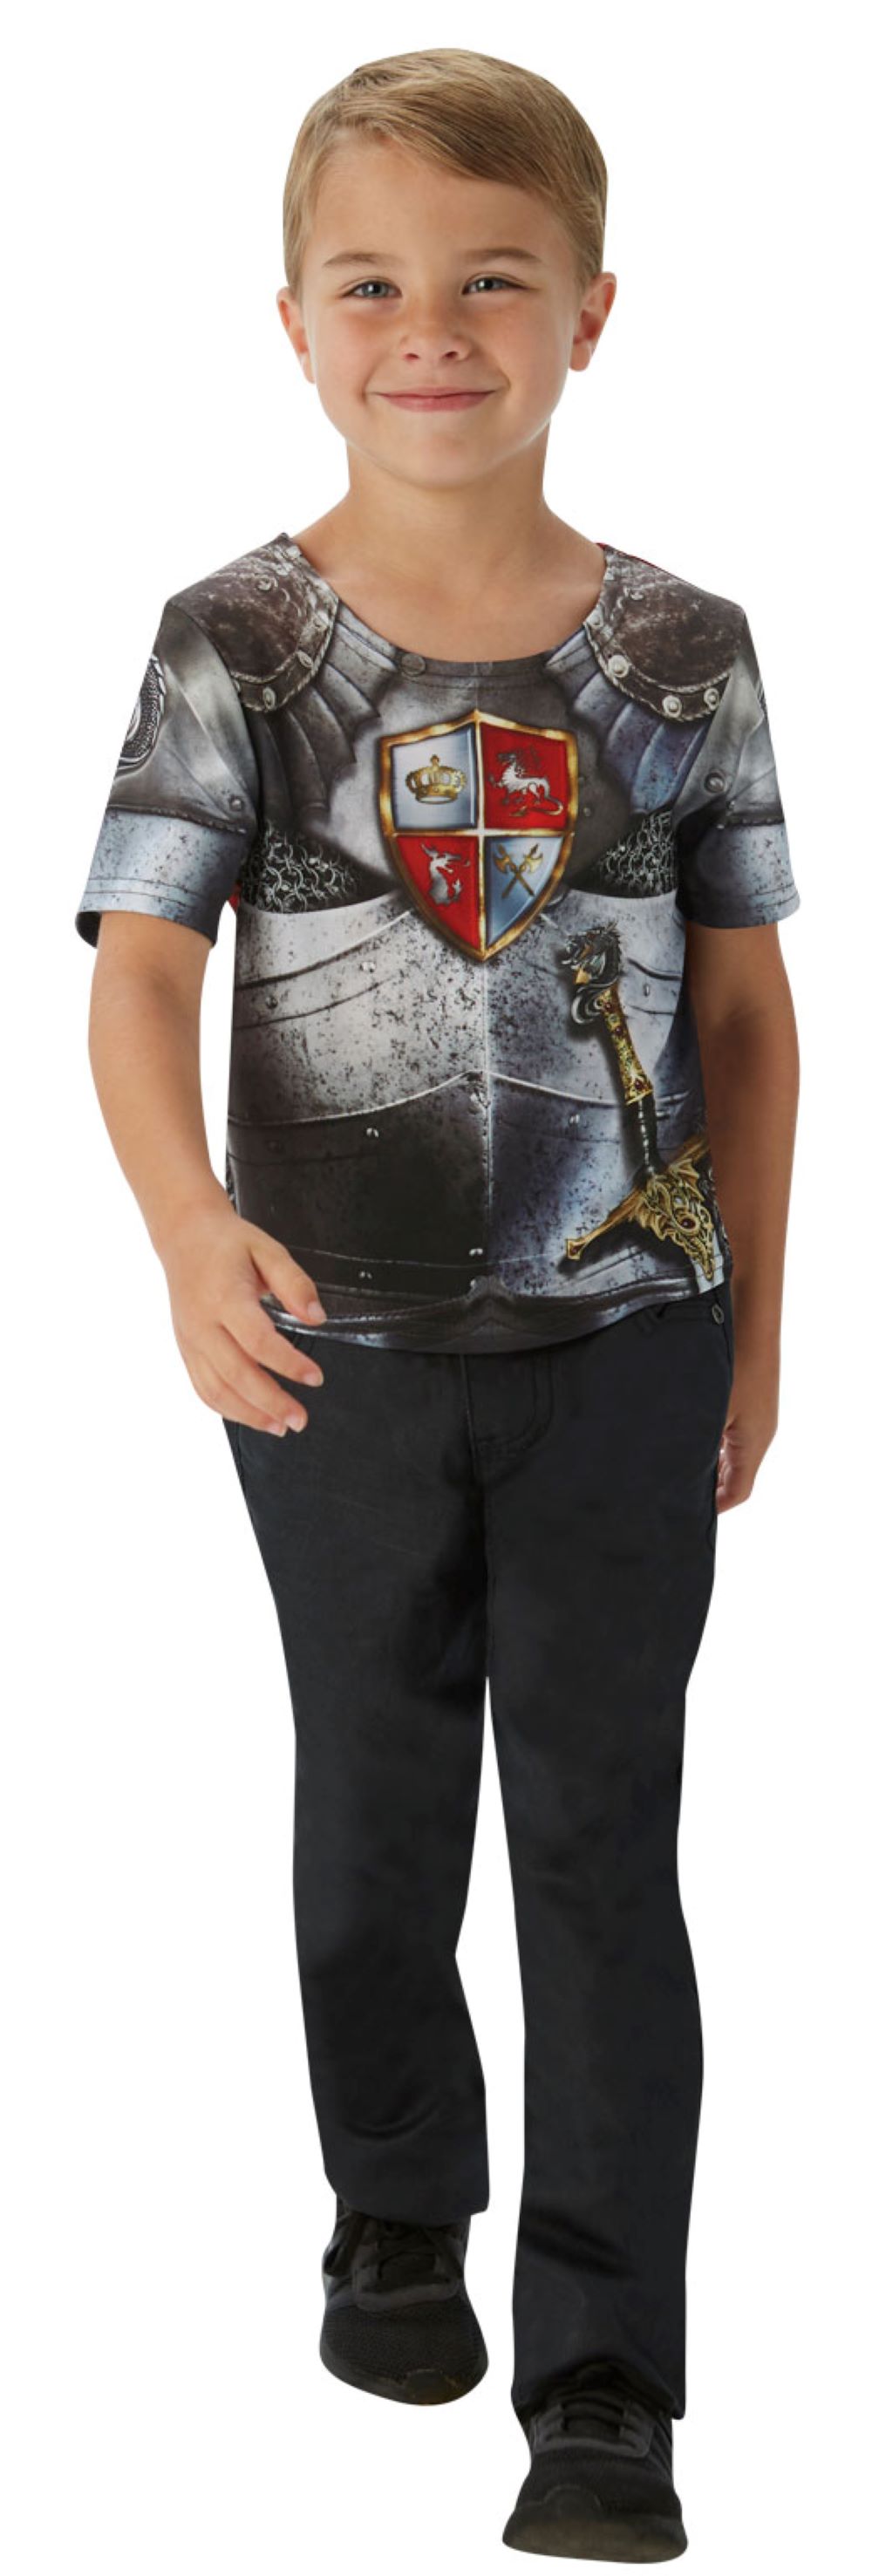 12 pcs - Roleplay Knight T-Shirt Book Week Children Boy Fancy Dress Costume - 3 Sizes 4 Each|GCL144-S/M/L|UK SELLER